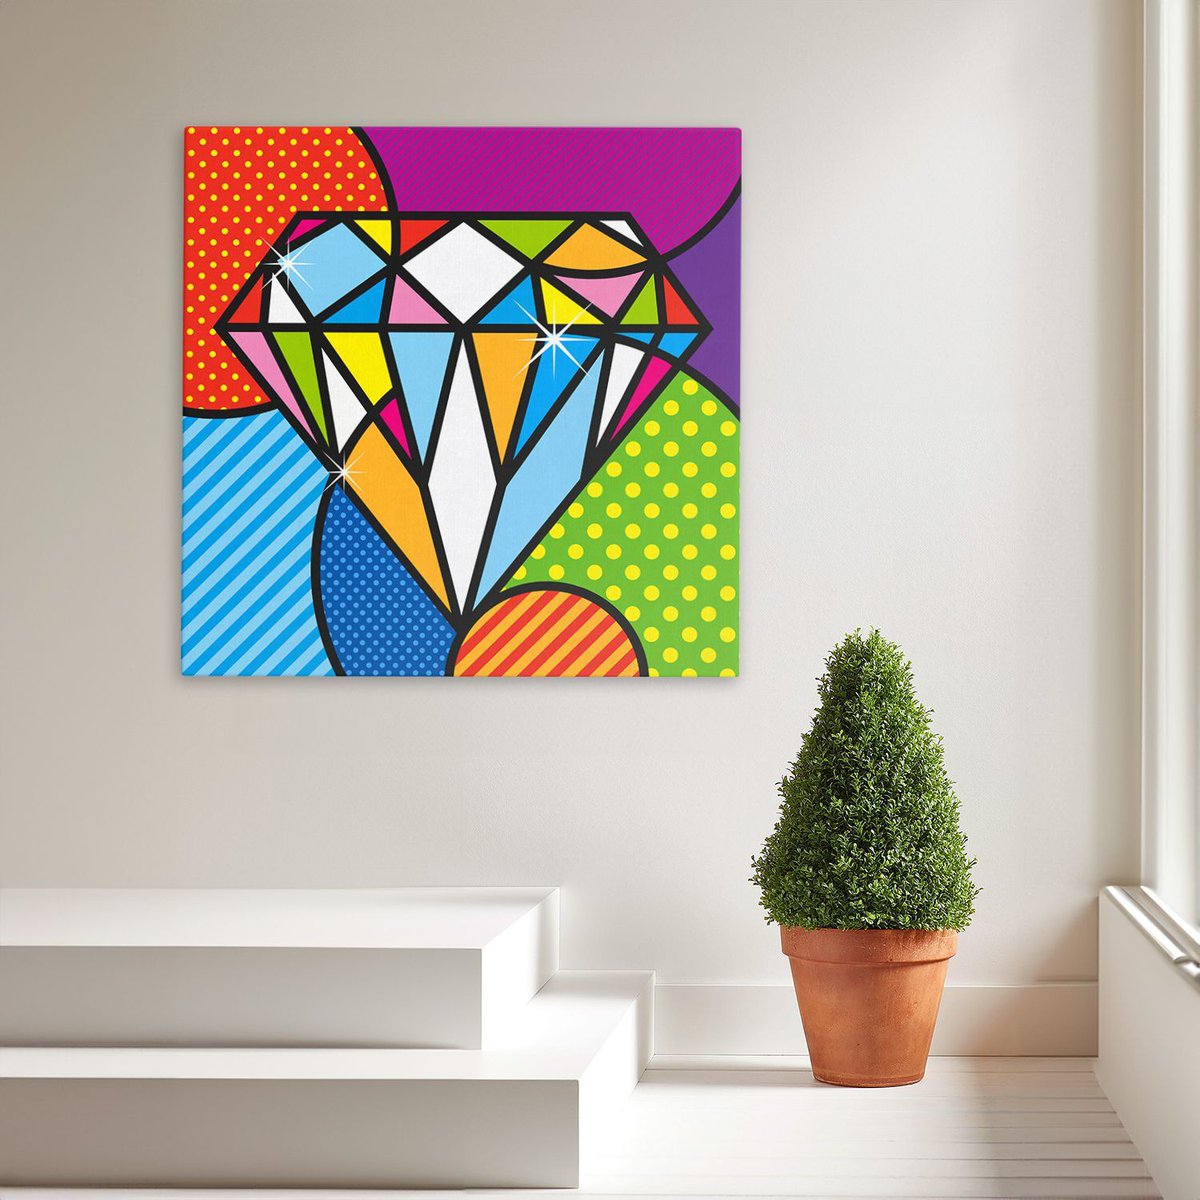 A vibrant pop art diamond, bursting with bright colors! 💎✨ 
.
.
#popart #diamond #colorful #artwork #contemporaryart #art #artist #painting #paintings #artoftheday #artdaily #popartstyle #drawing #sketch #clipart #britto #largeart #modernart #digitalart